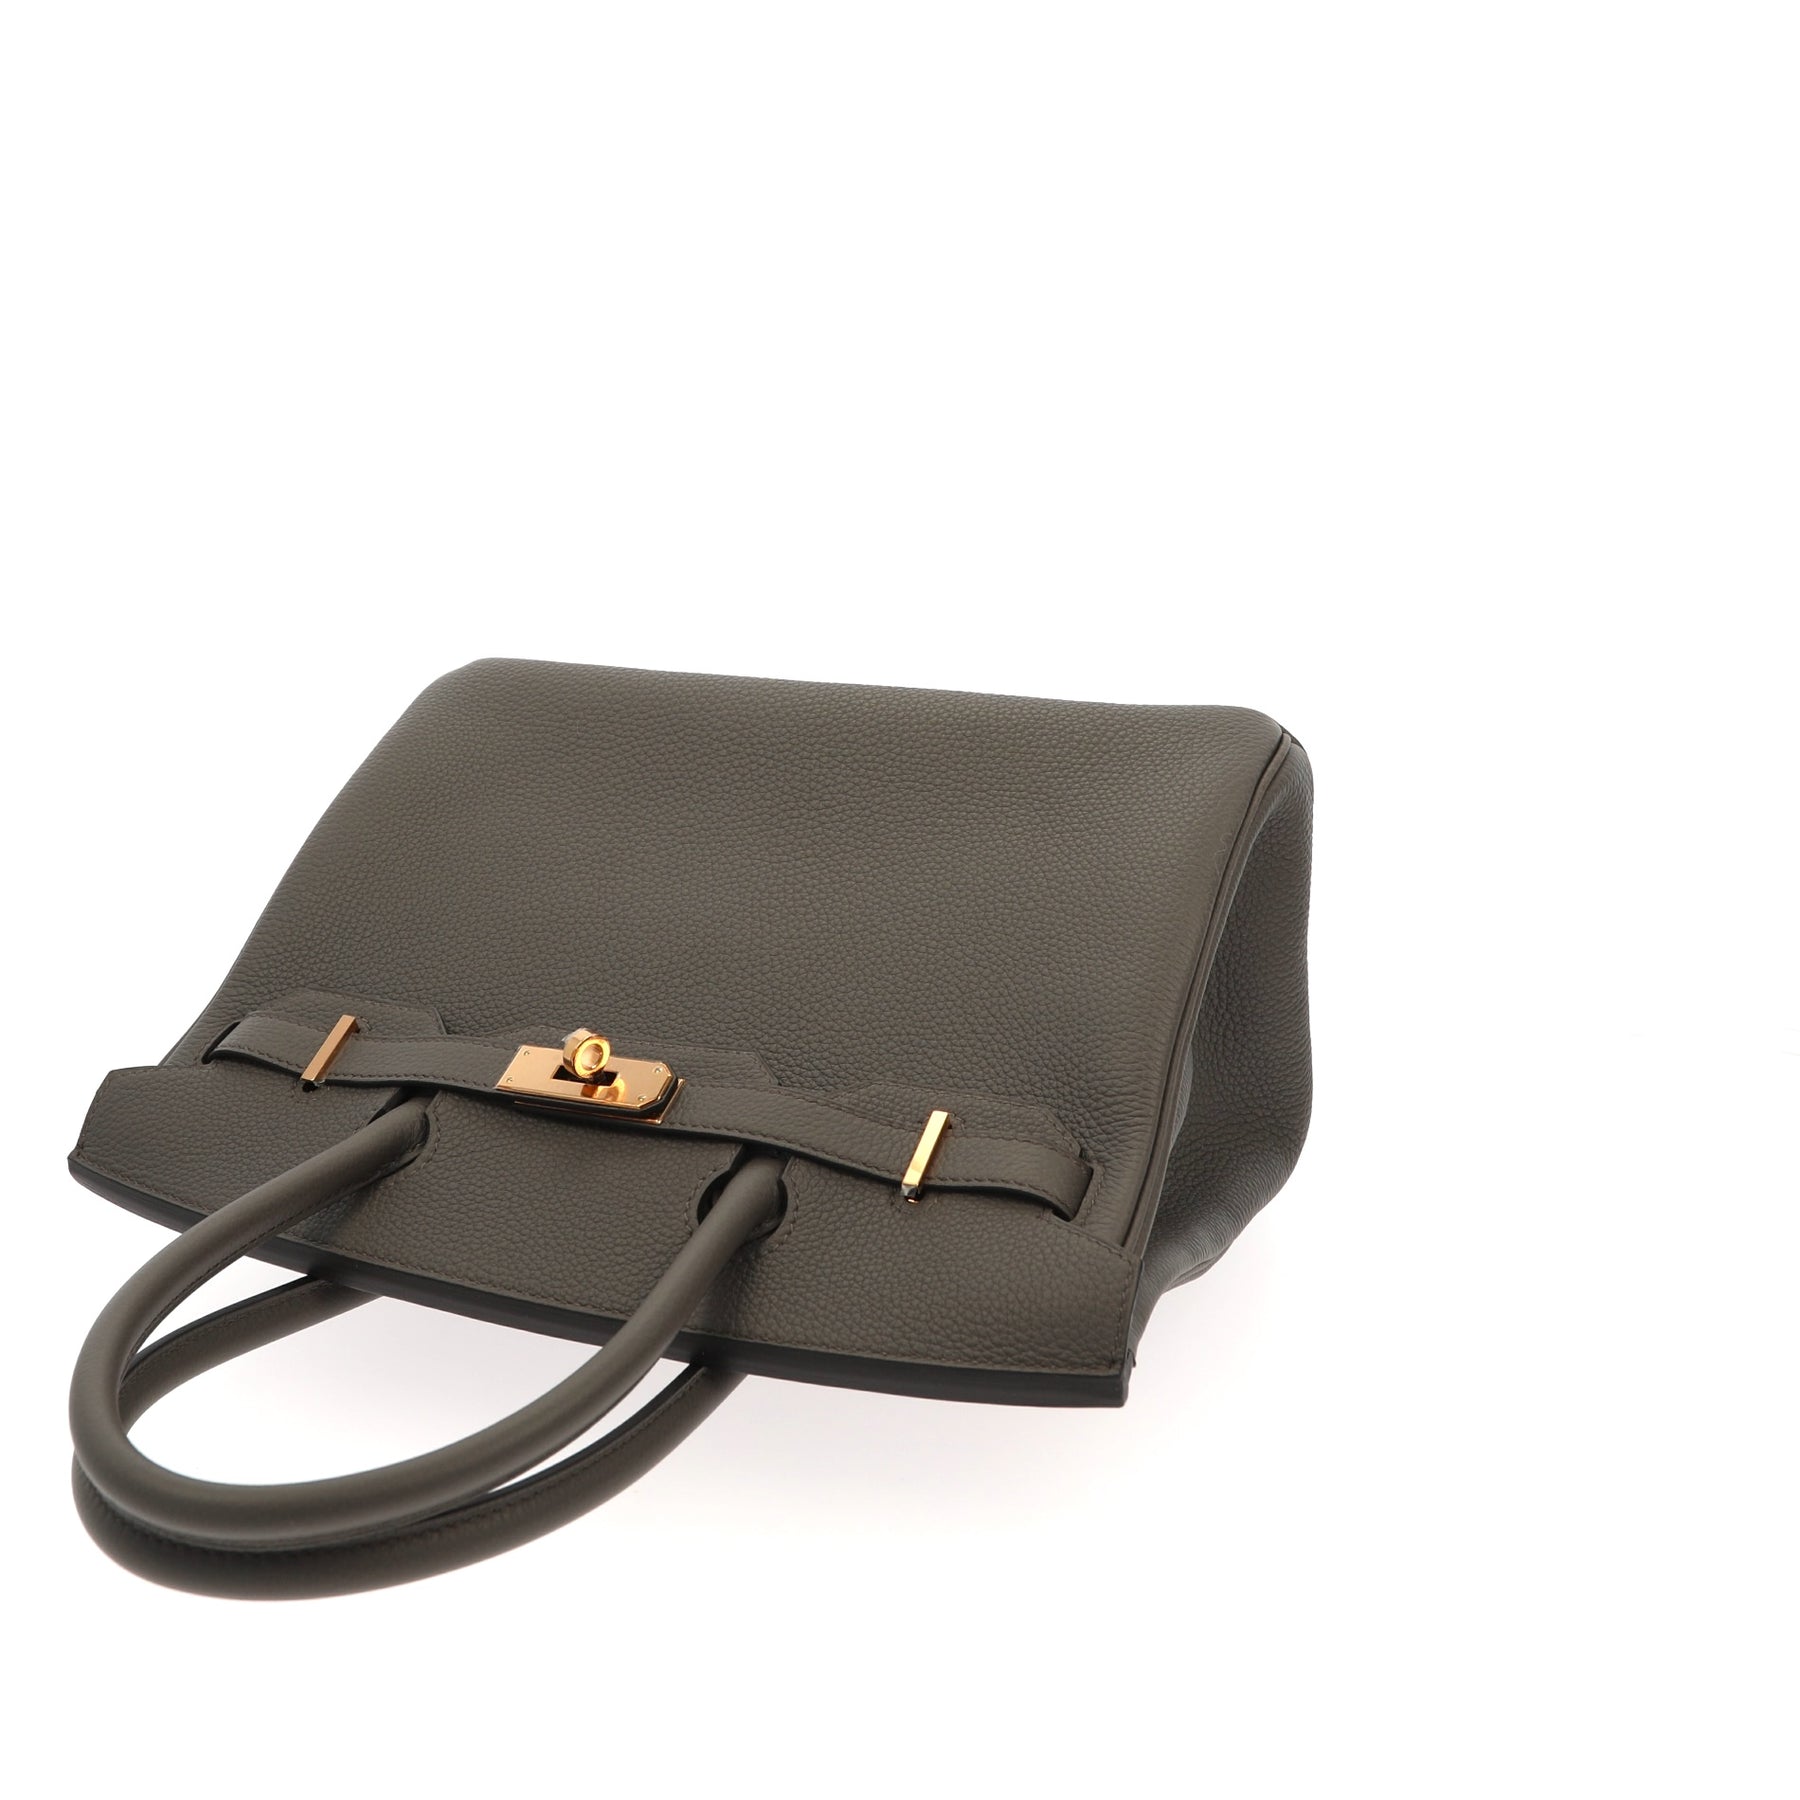 Hermès Birkin 30 Handbag in Etain color leather and Rose gold hardware –  Fancy Lux